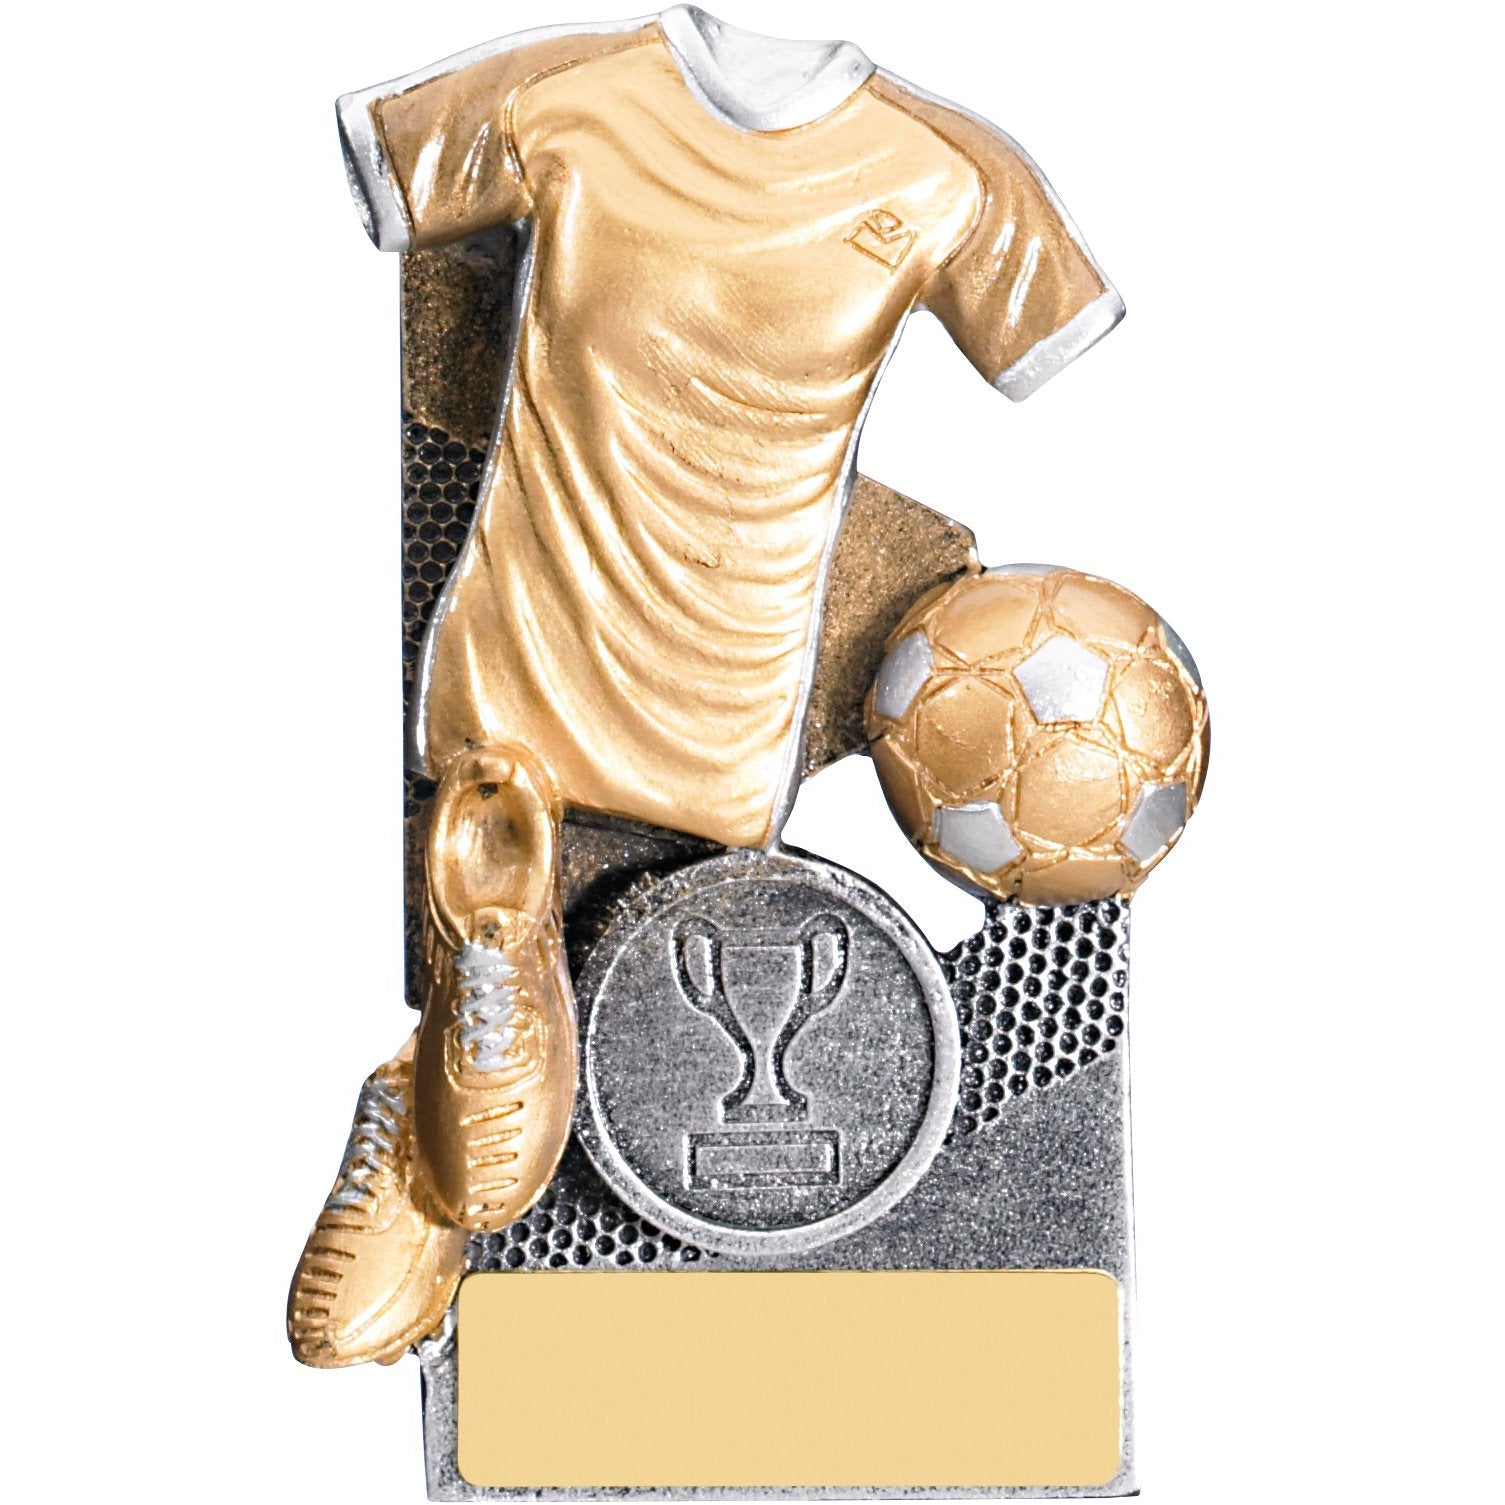 Total Football Resin Award (Gold/Silver)